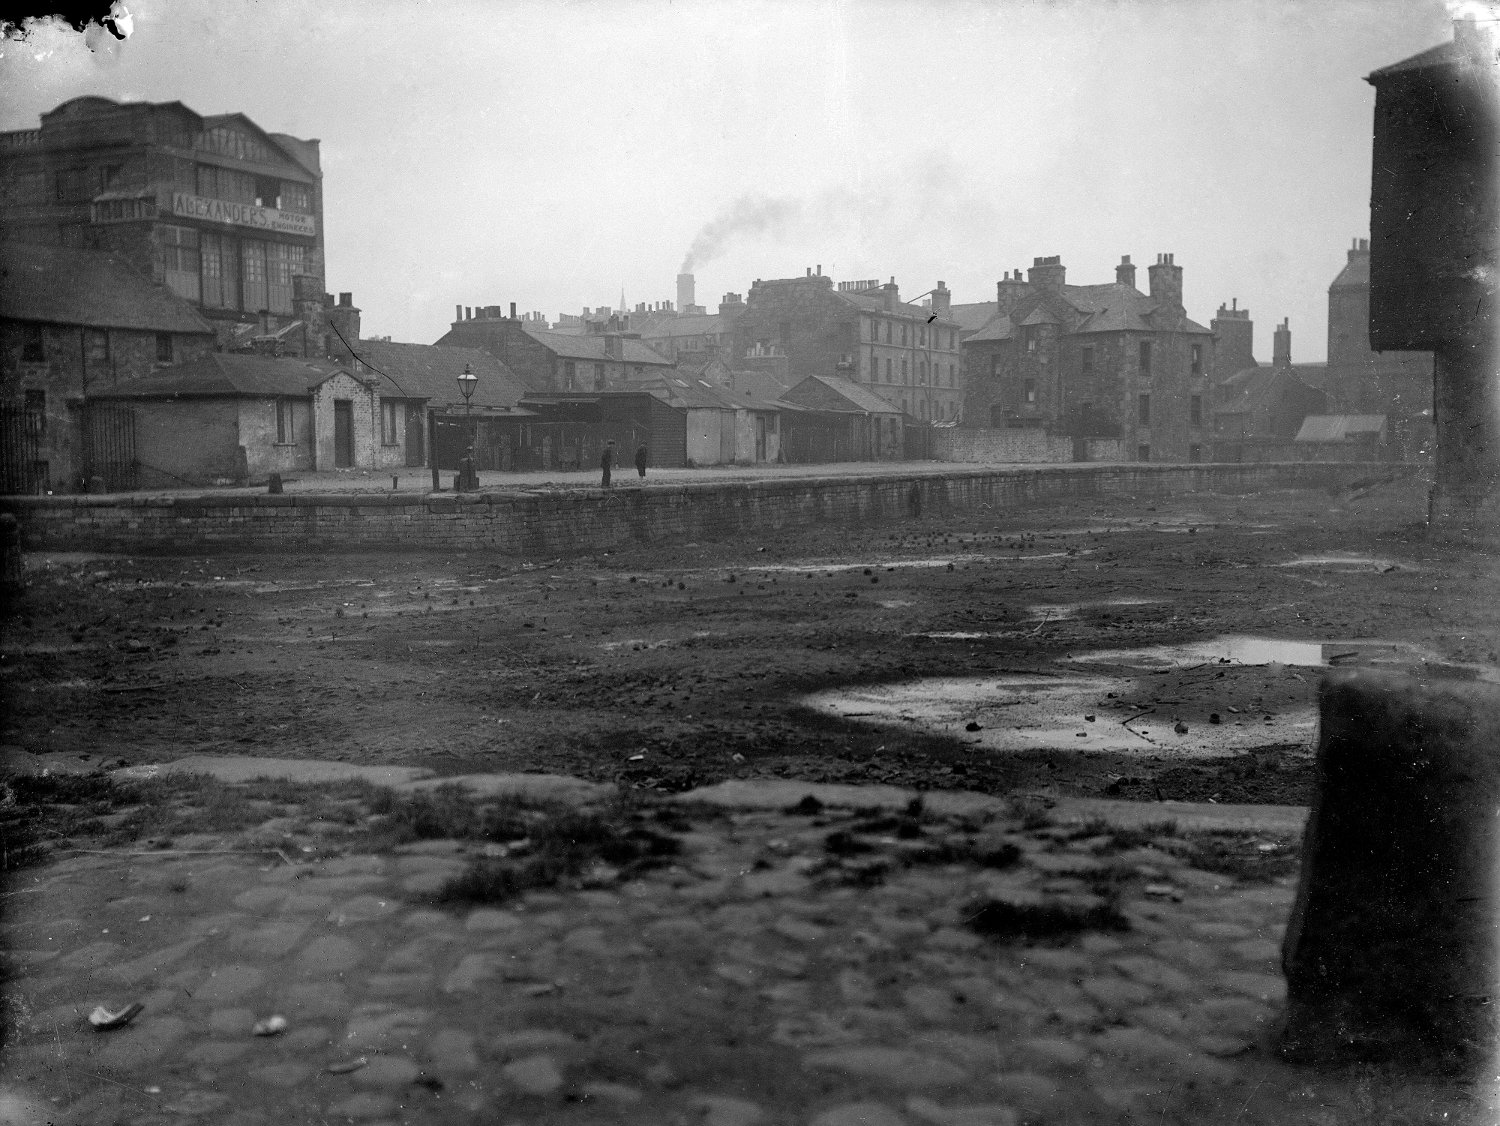 Infilling at Port Hopetoun (c) Historic Environment Scotland (Francis M. Chrystal Collection)